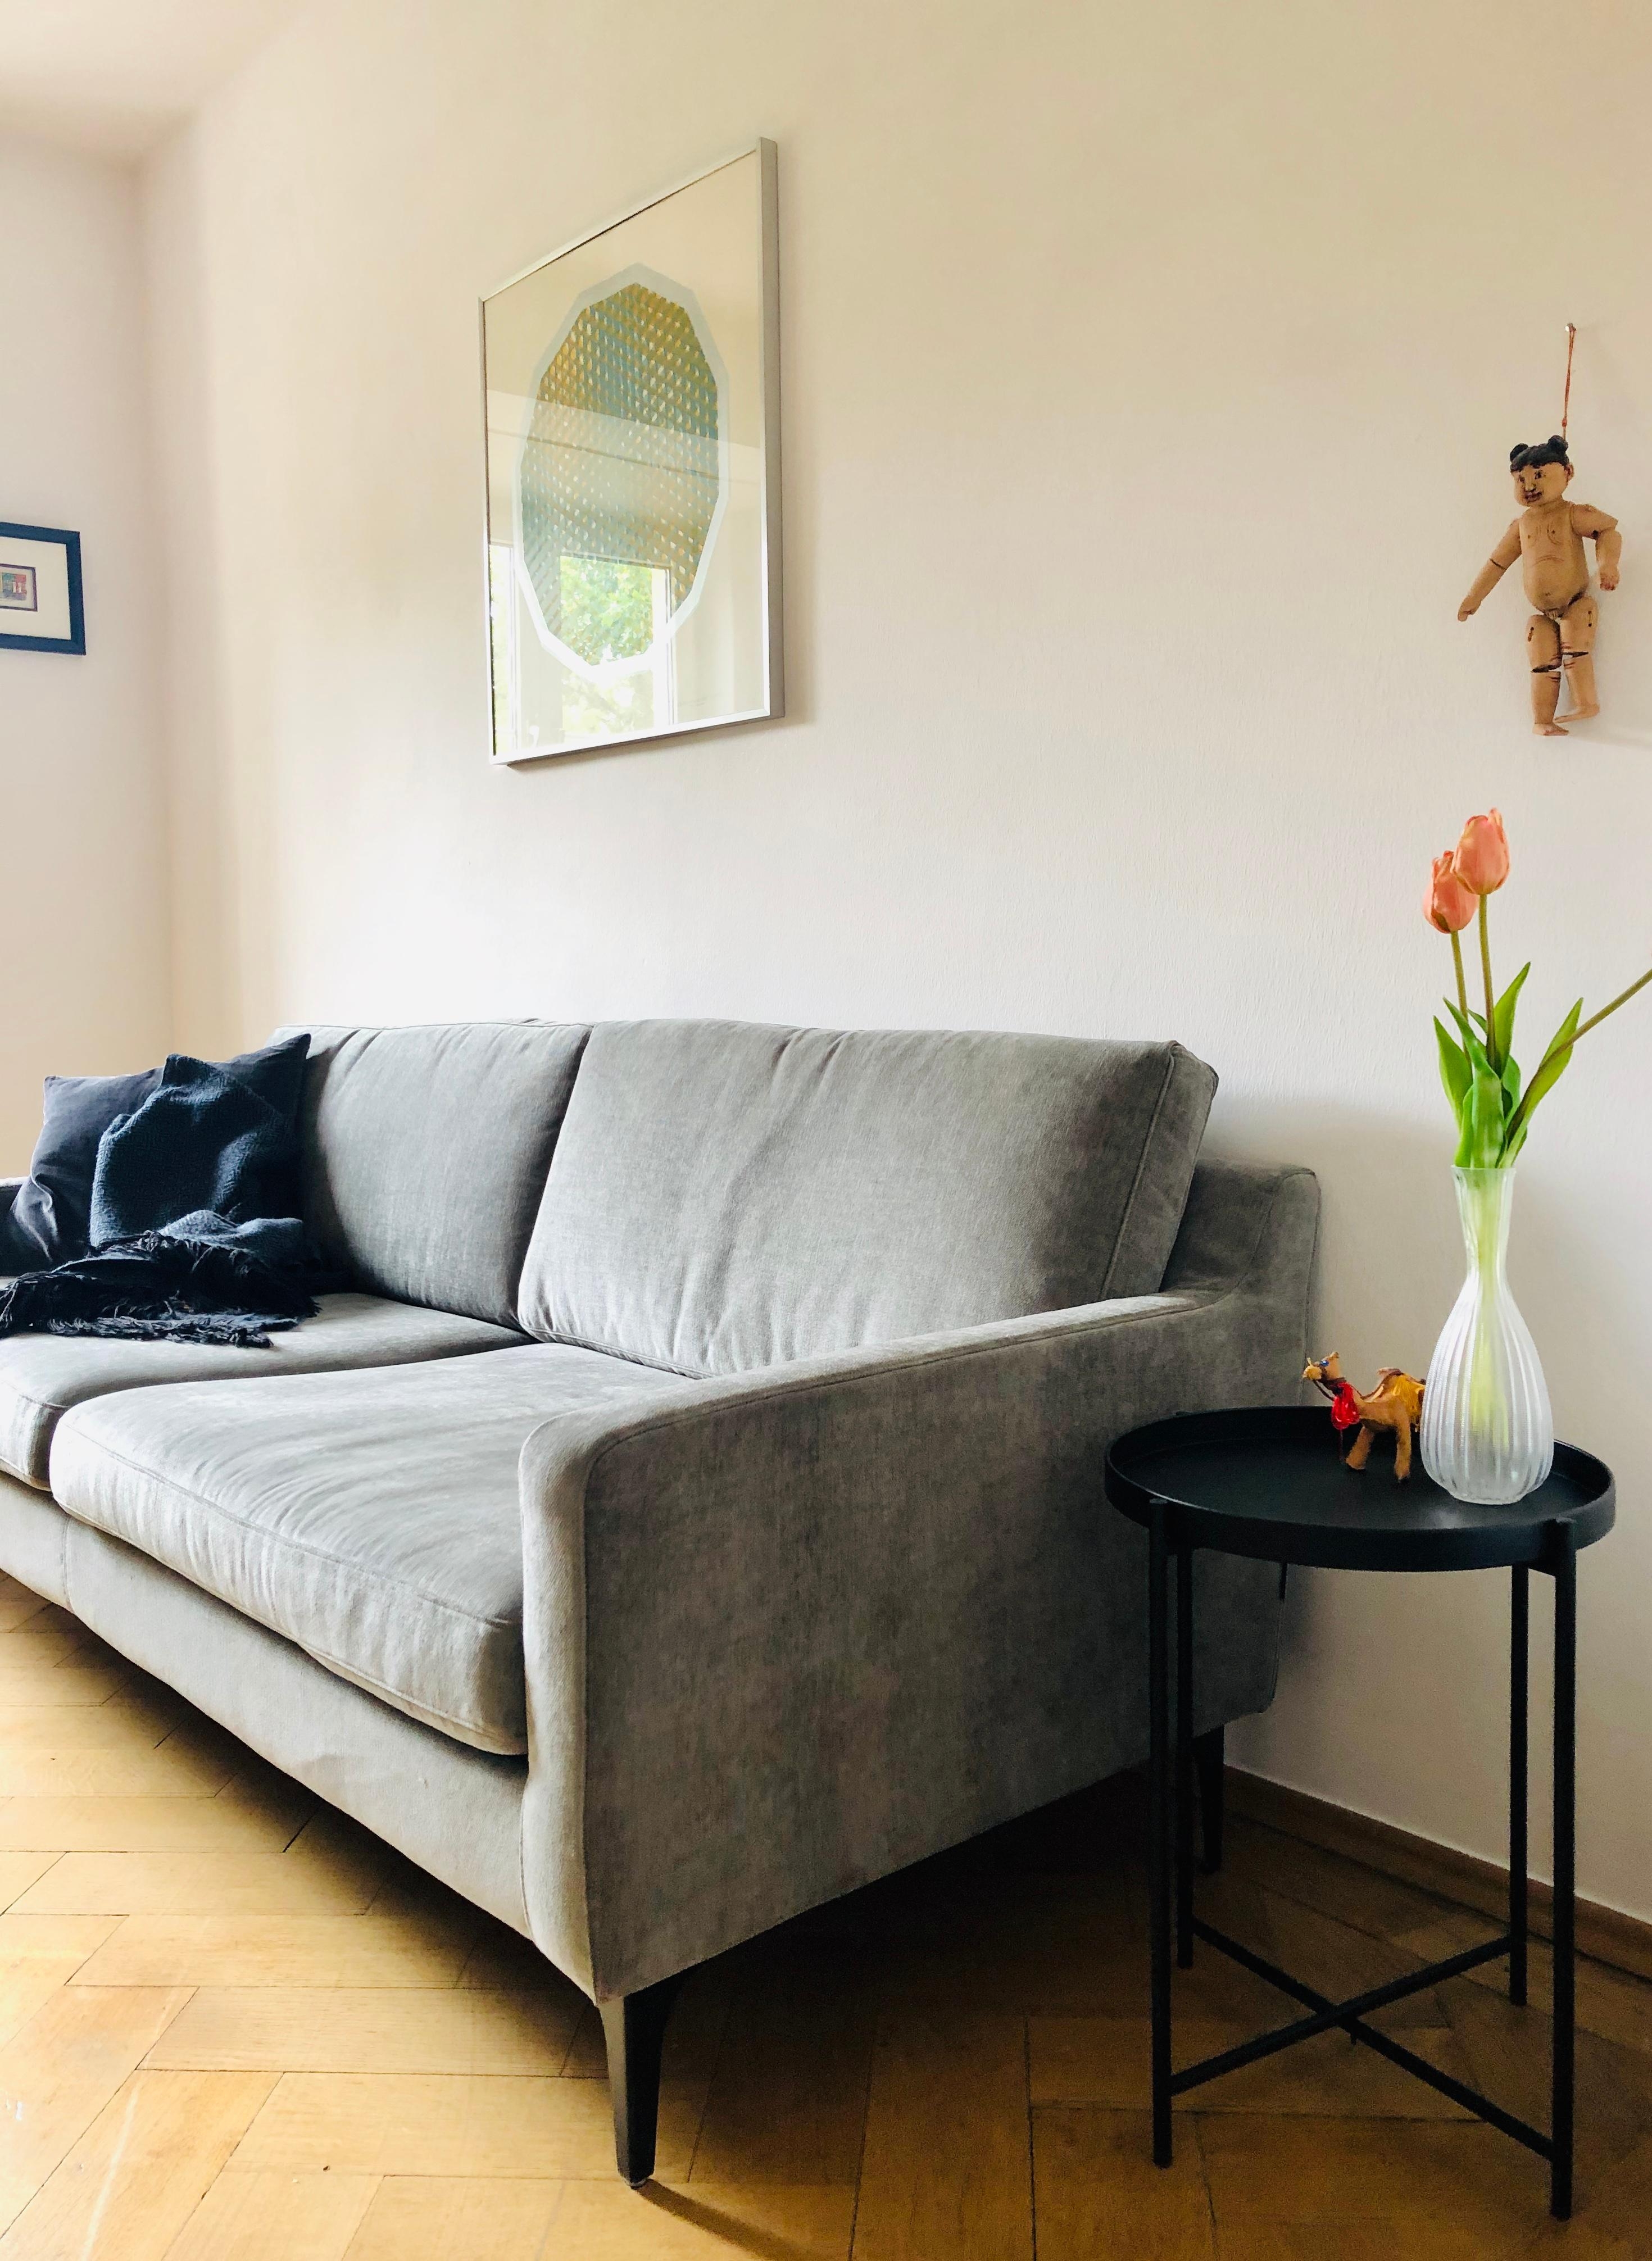 Neue Couch ...
#wohnzimmer #altbau #couchpotato #cozy #sofacompany